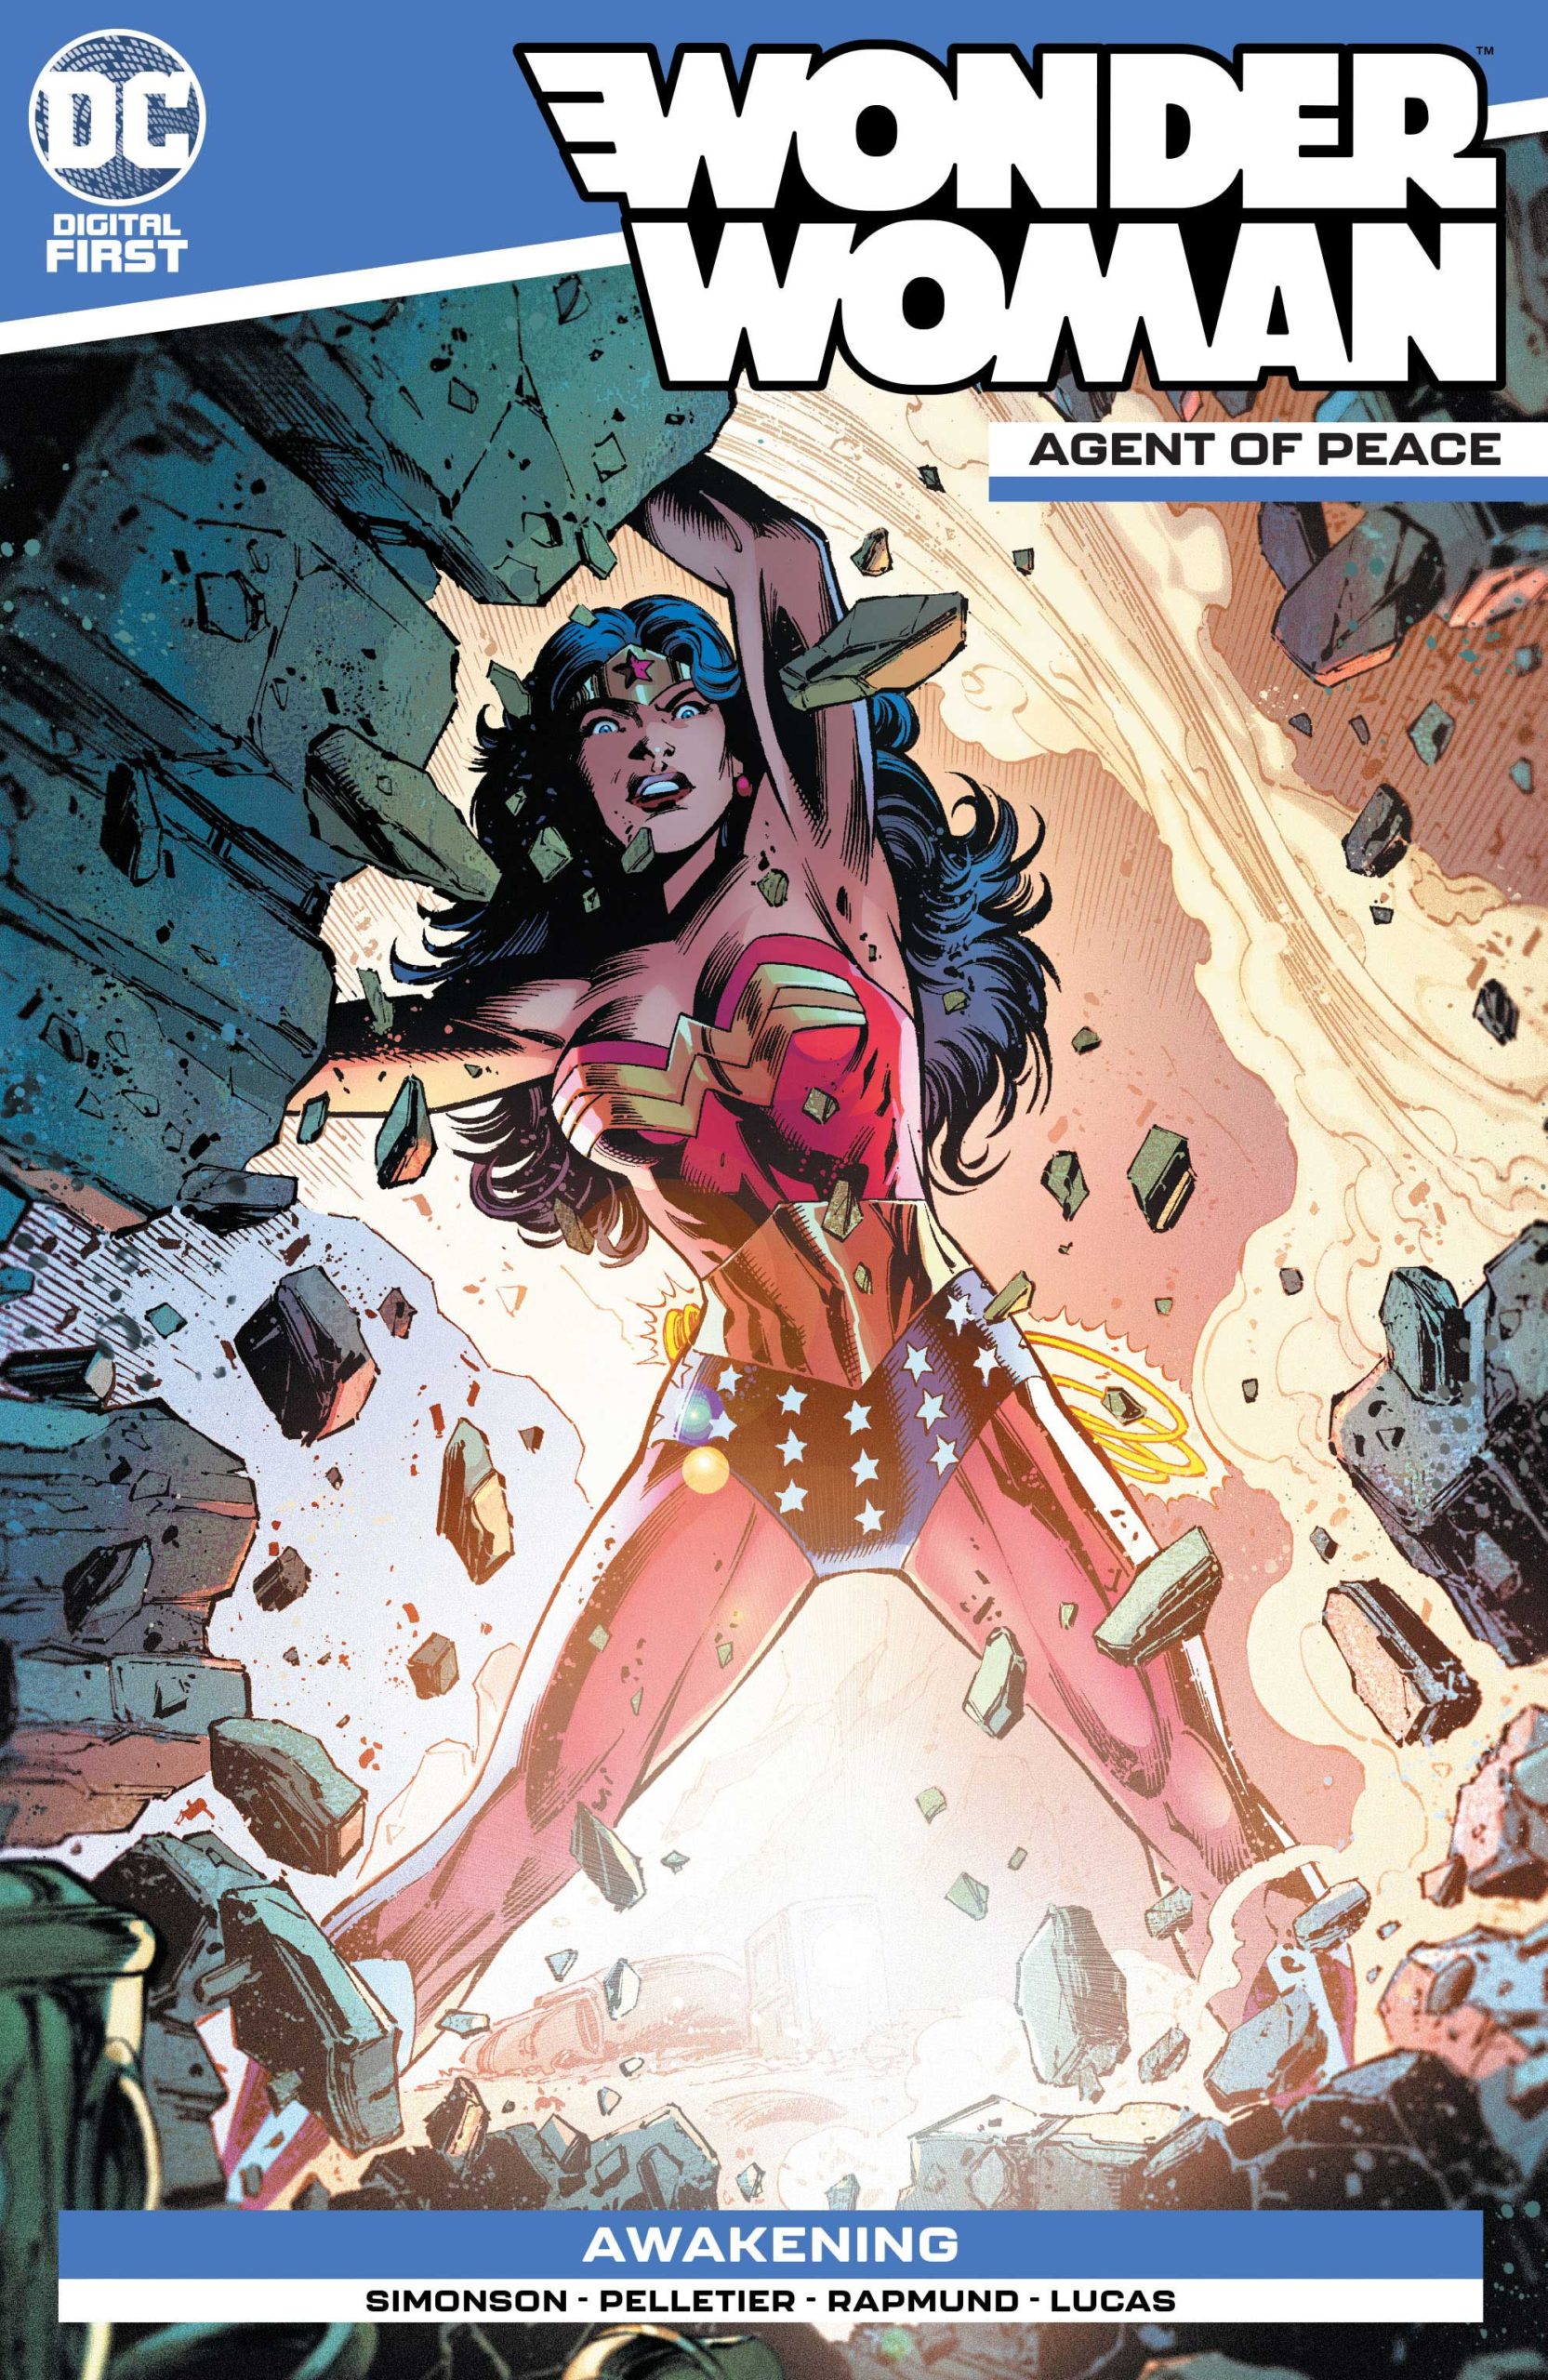 [Preview] Wonder Woman: Agent of Peace #8 — Major Spoilers — Comic Book ...